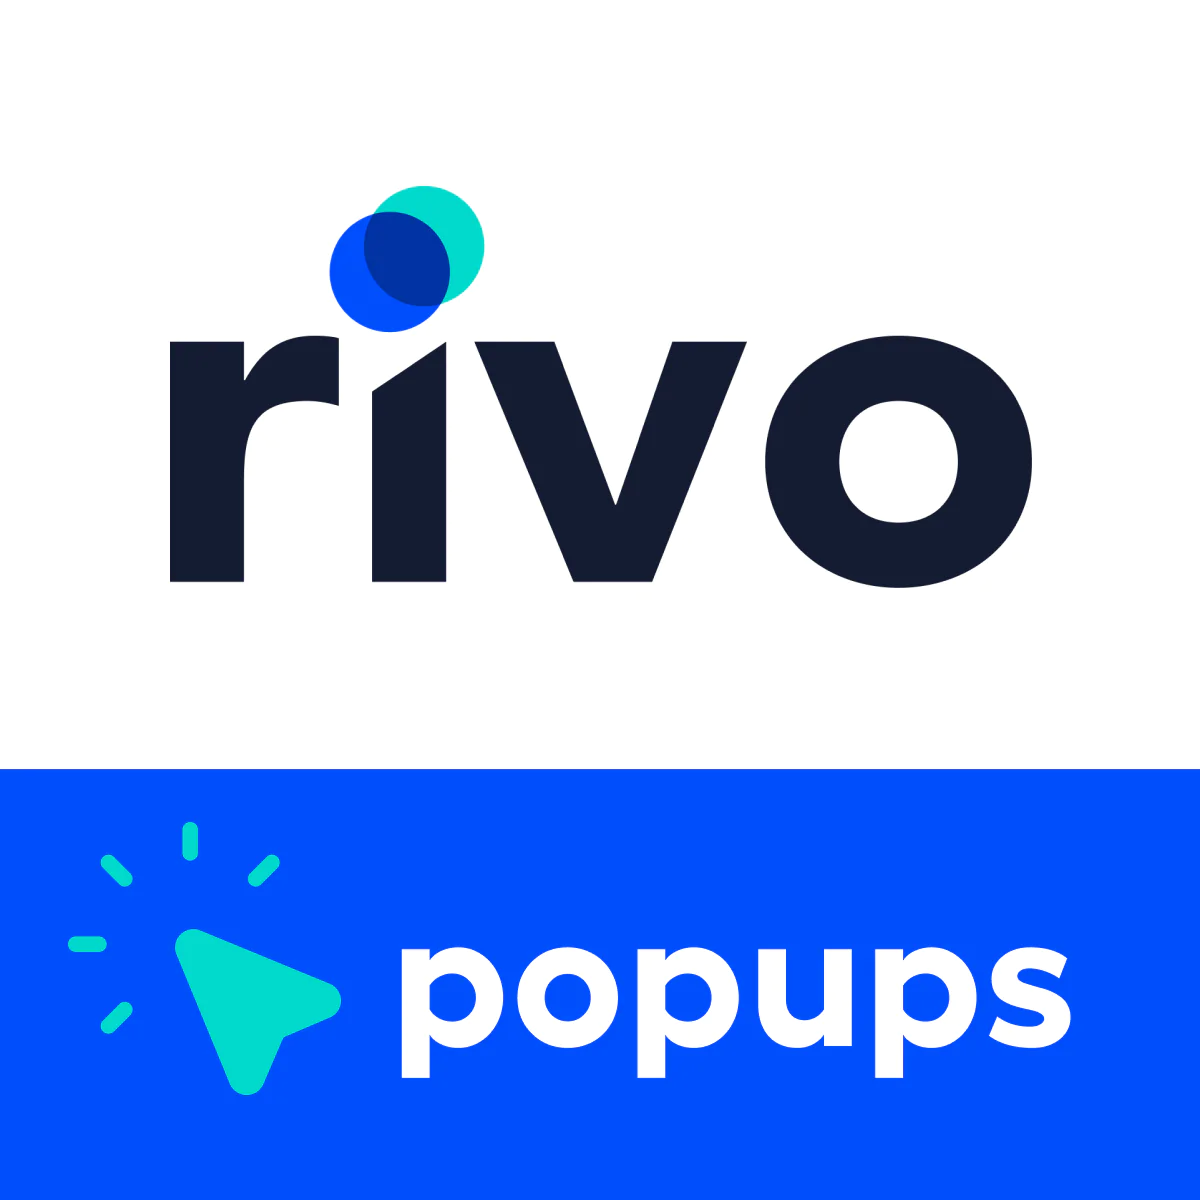 Rivo Popups ‑ Email Pop ups